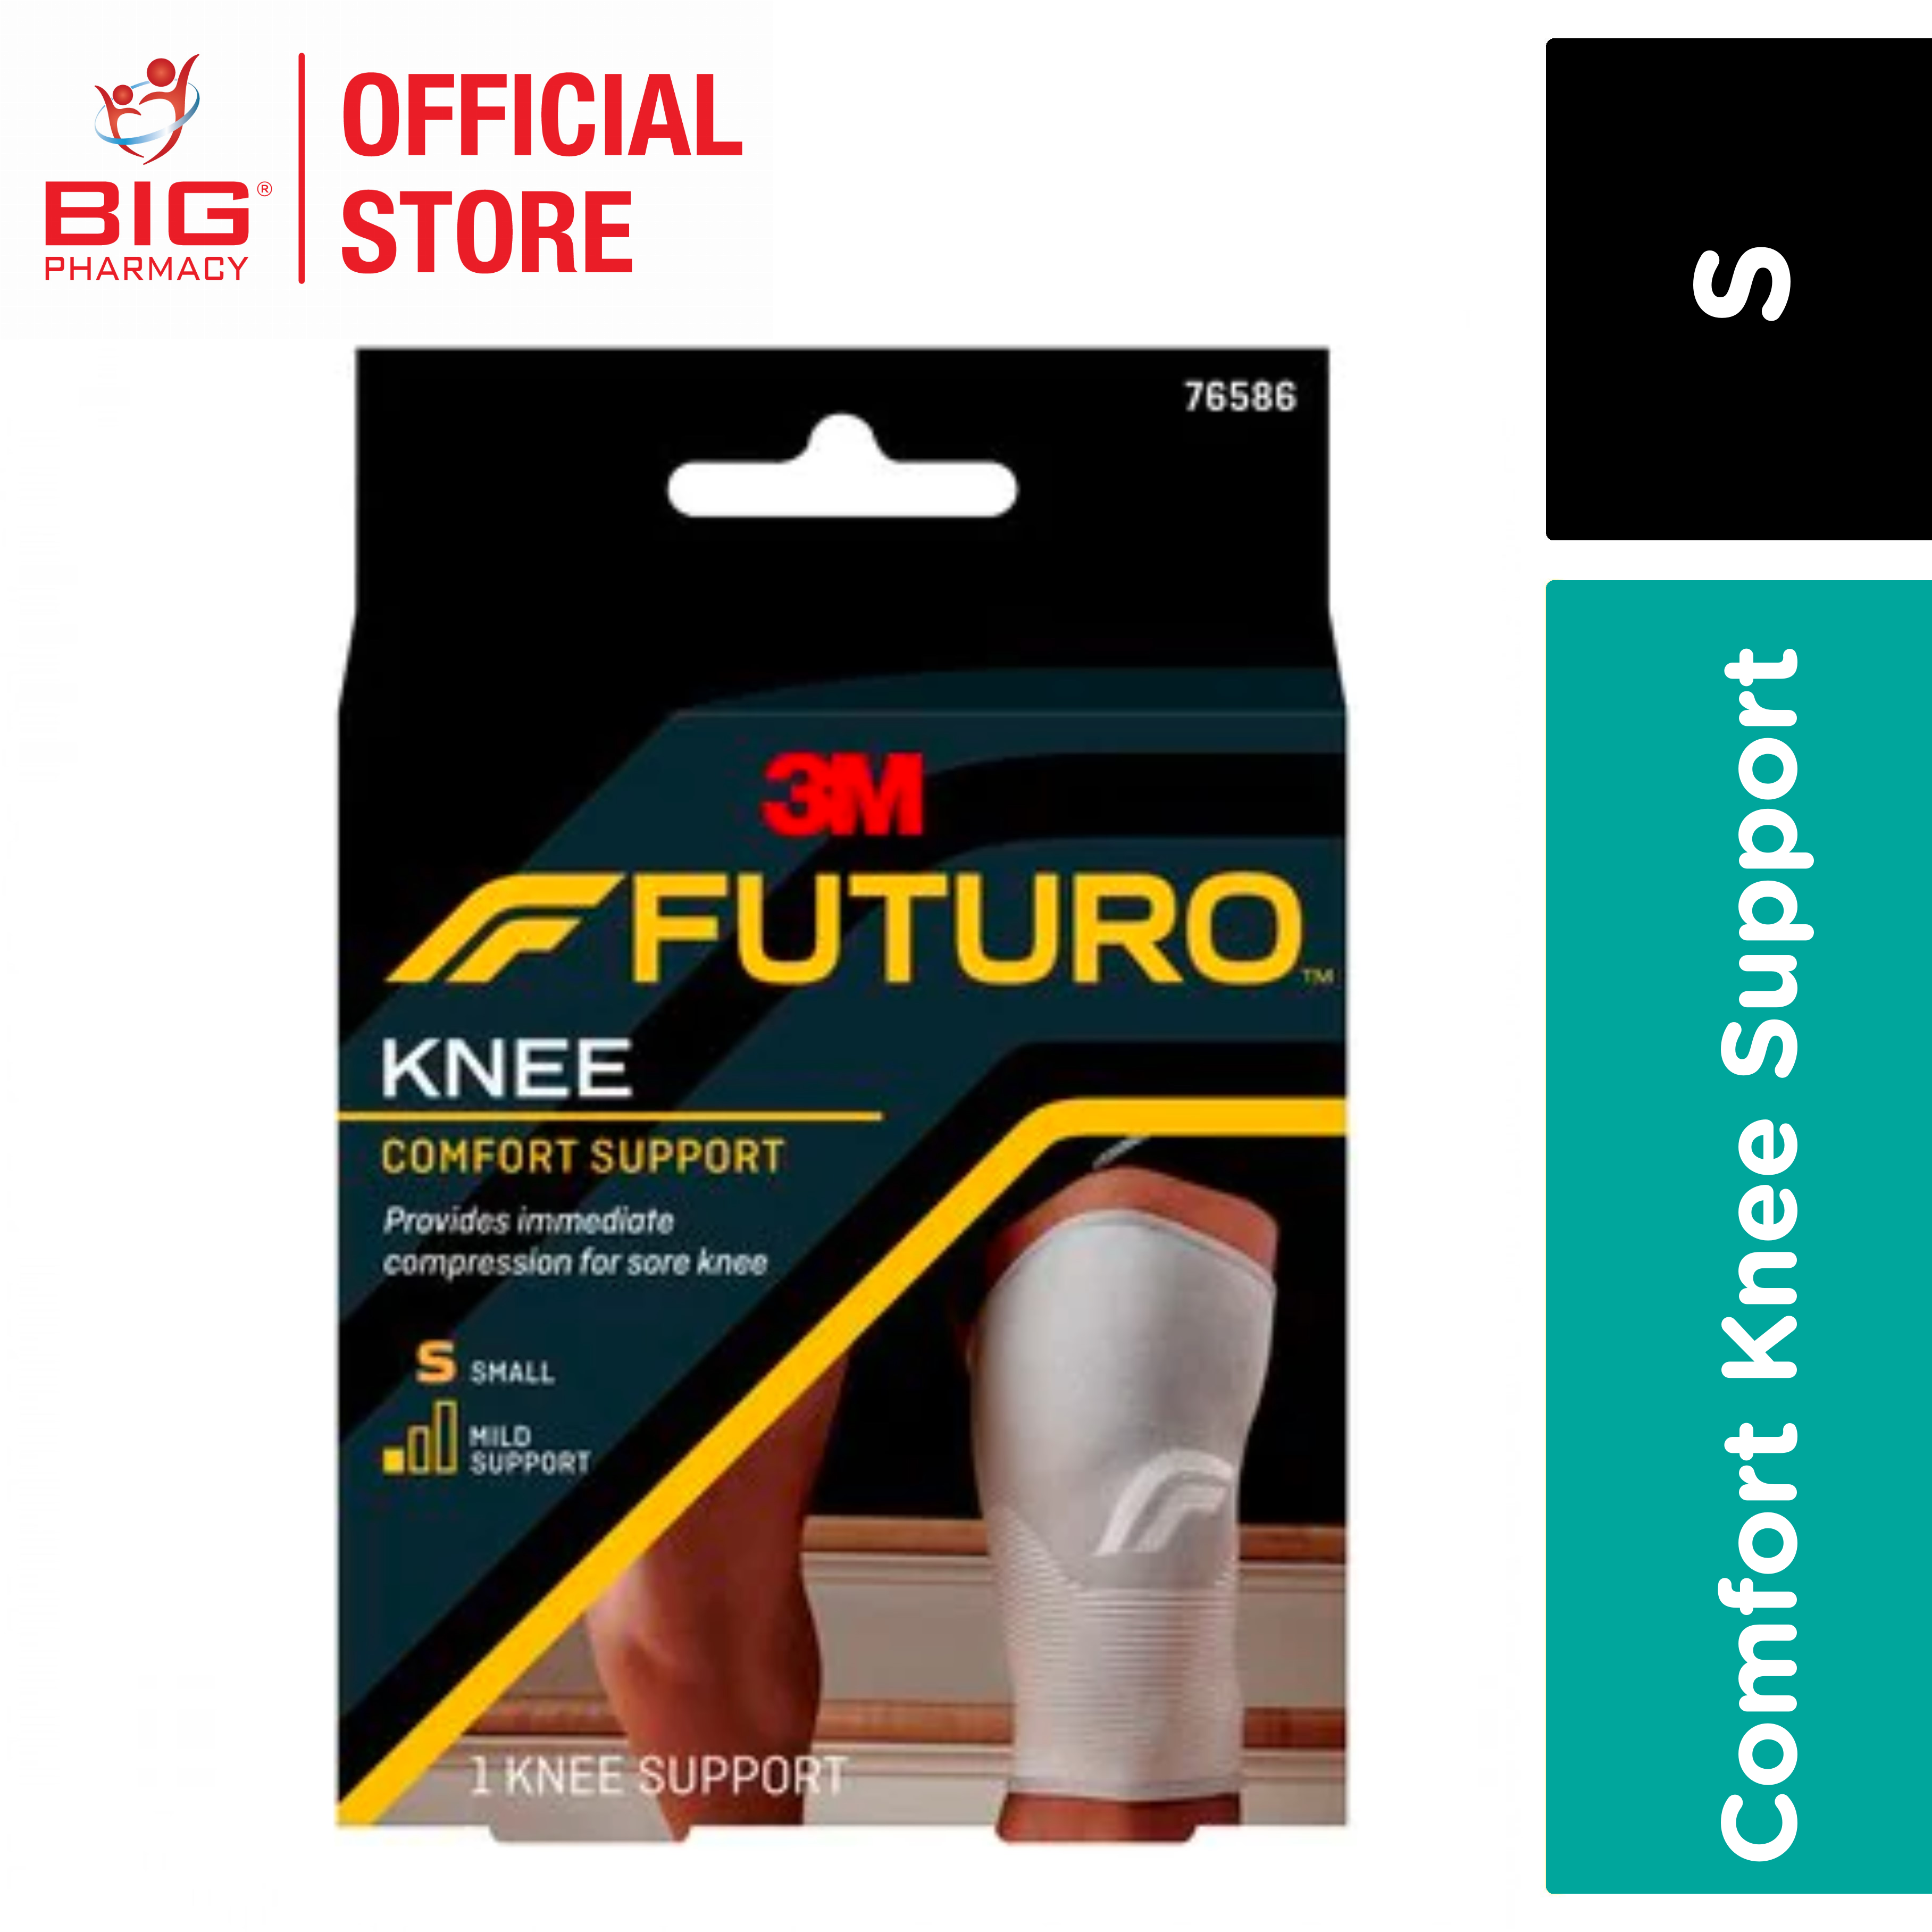 Futuro Comfort Lift Knee Support (S)